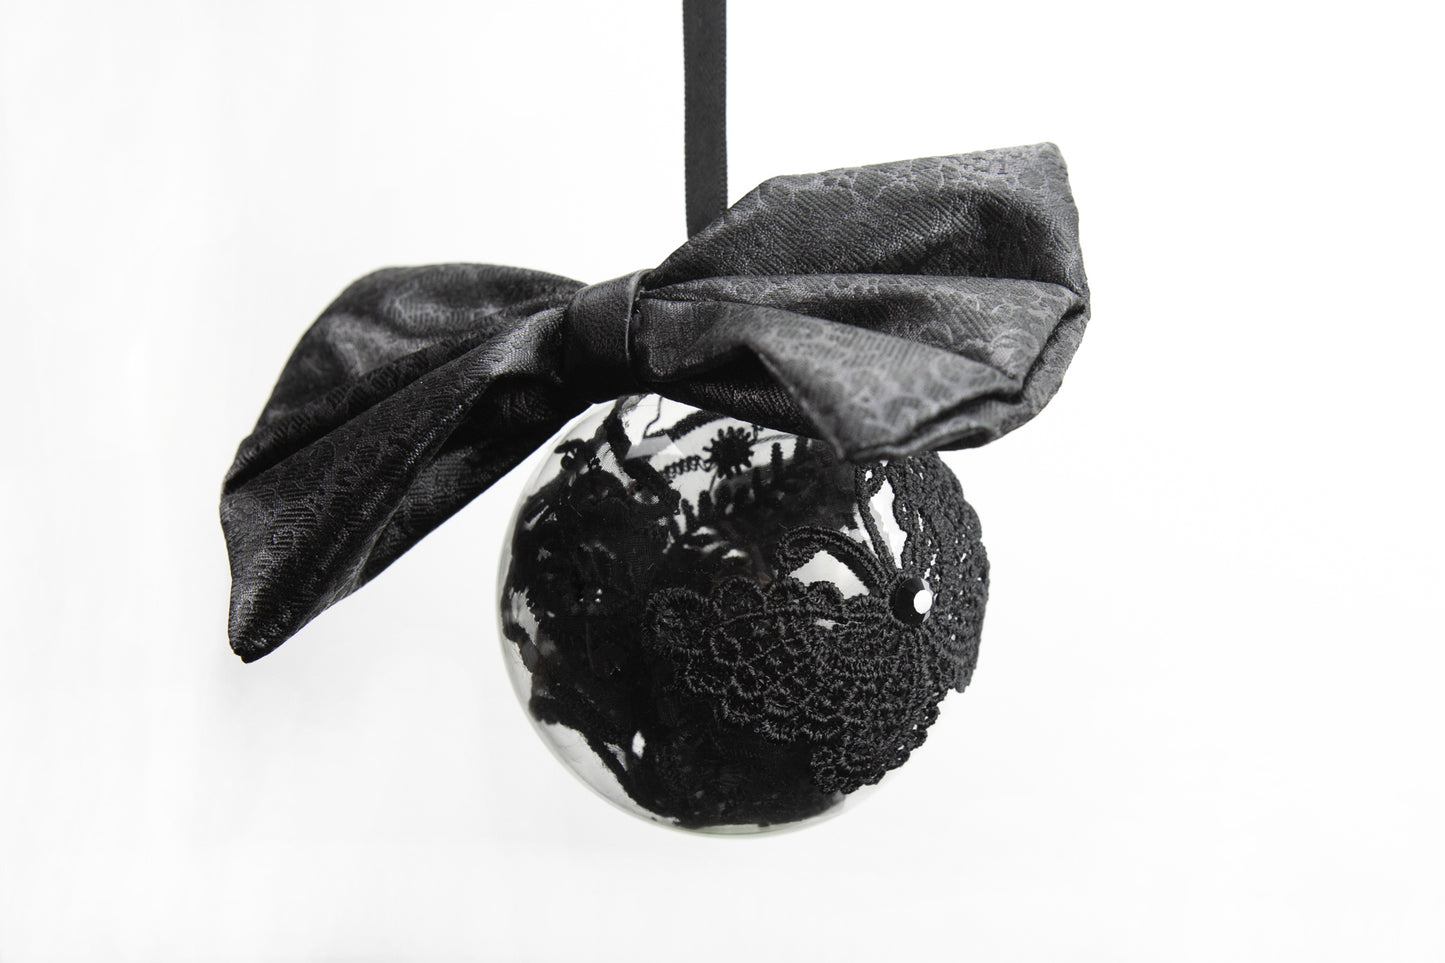 Black Bow Version III Glass Ornament